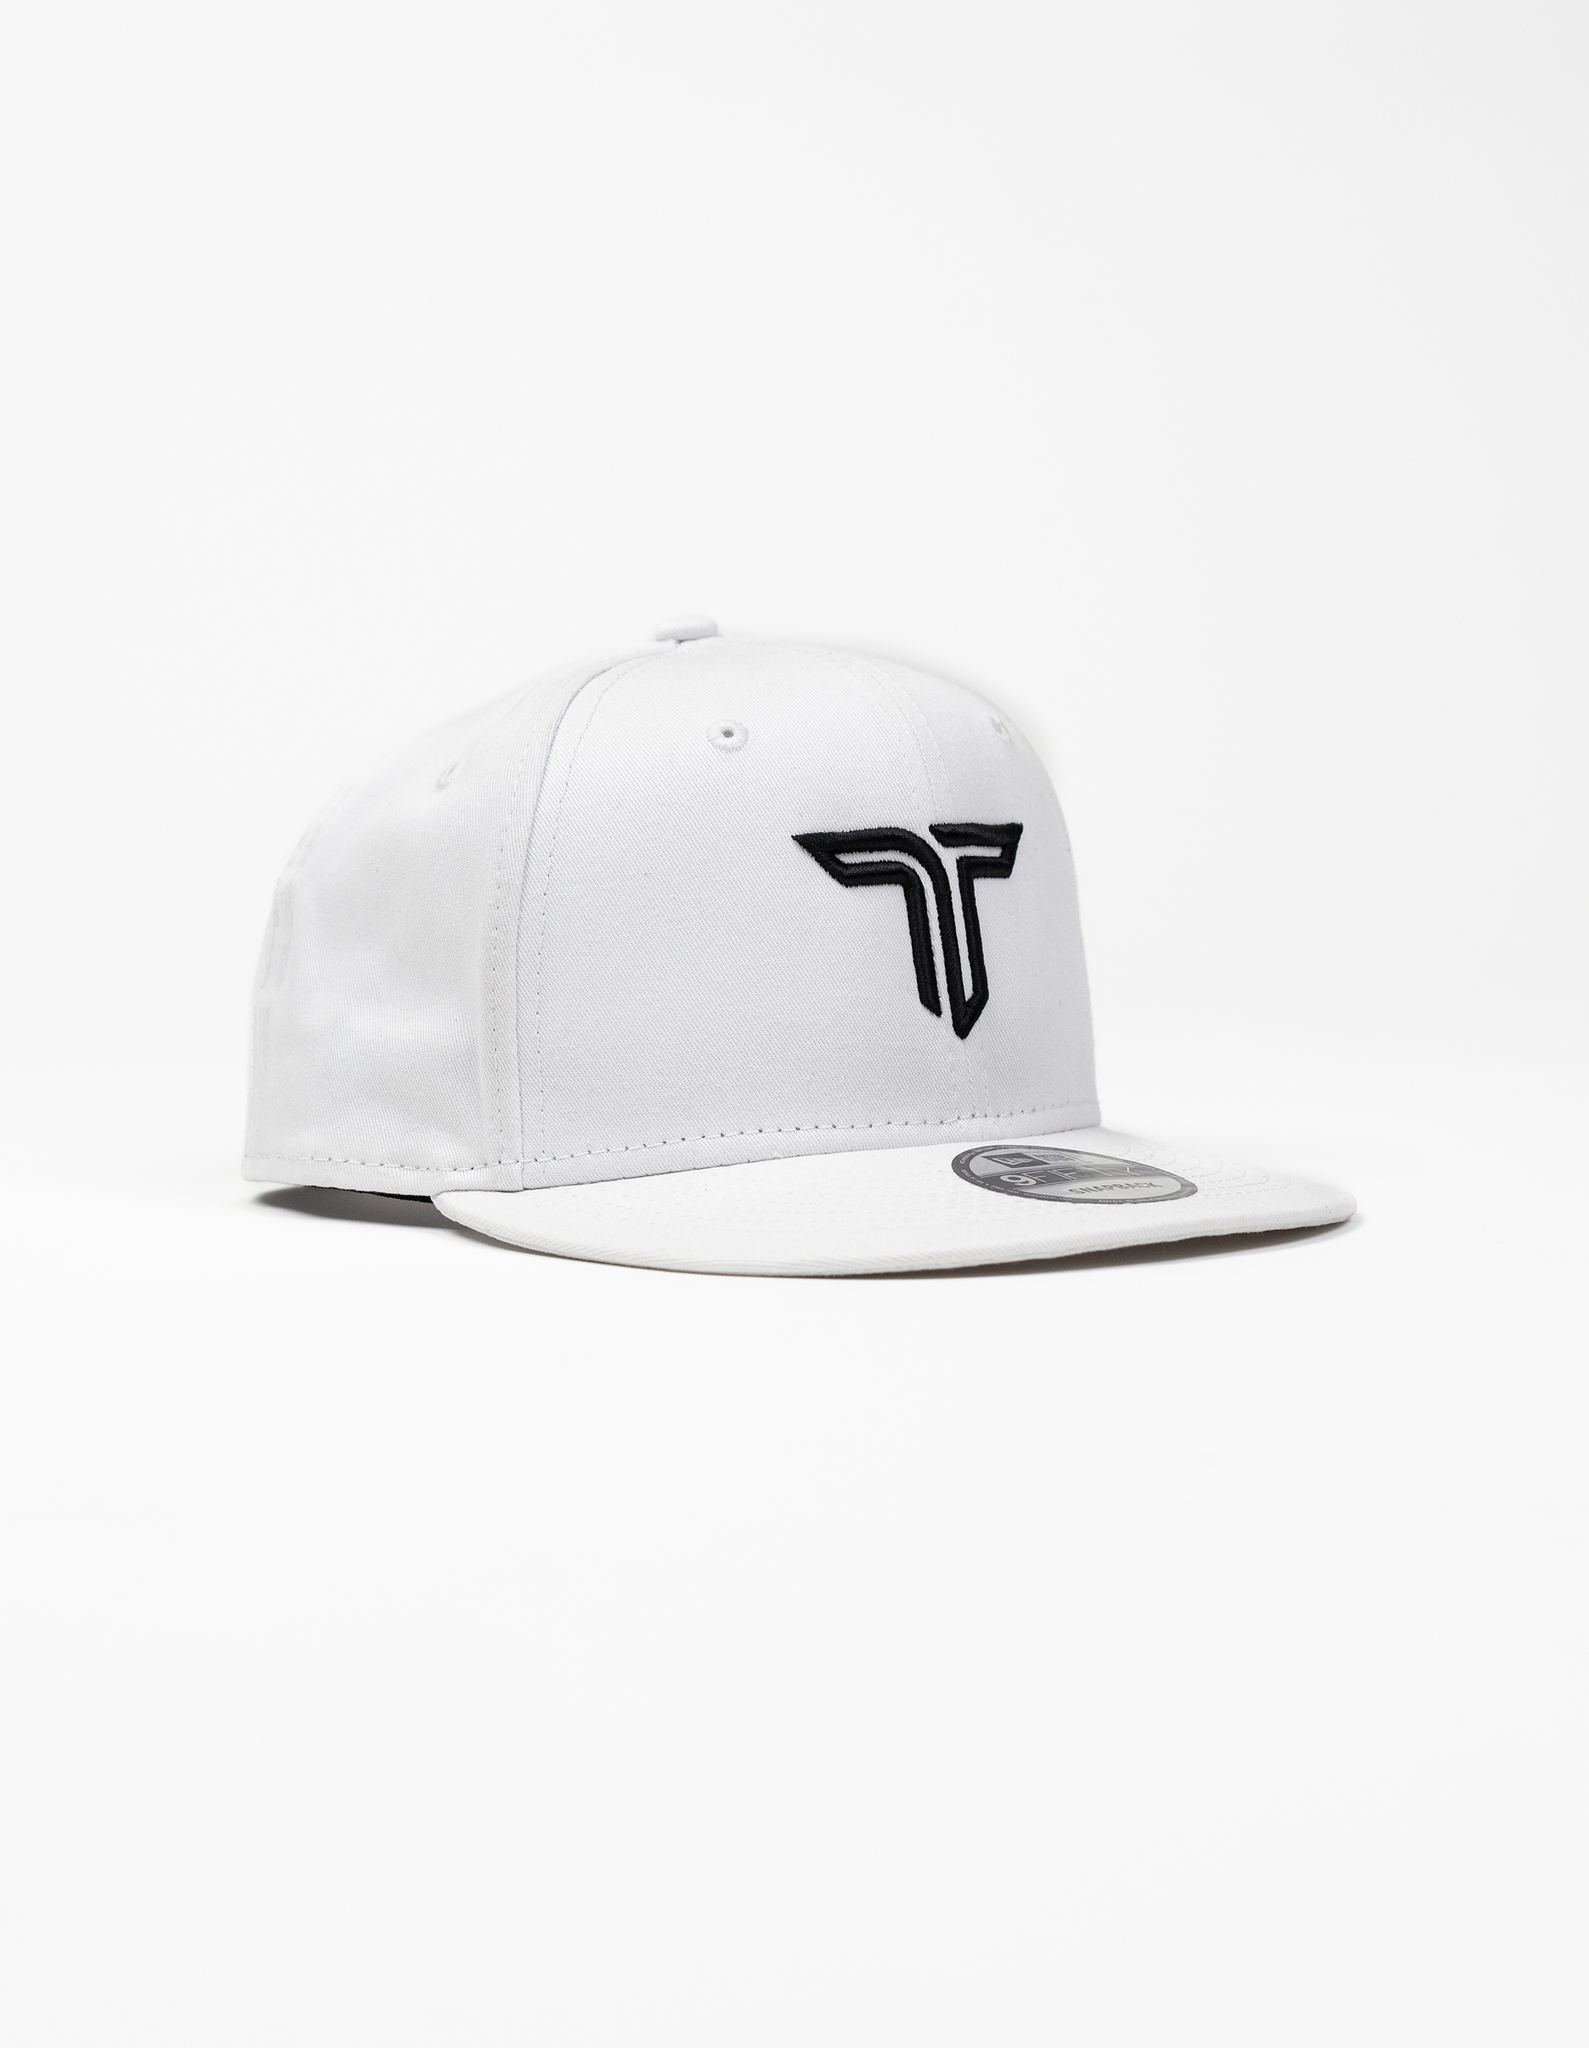 Takedown Era 9Fifty Snapback White/Black – Takedown Sportswear